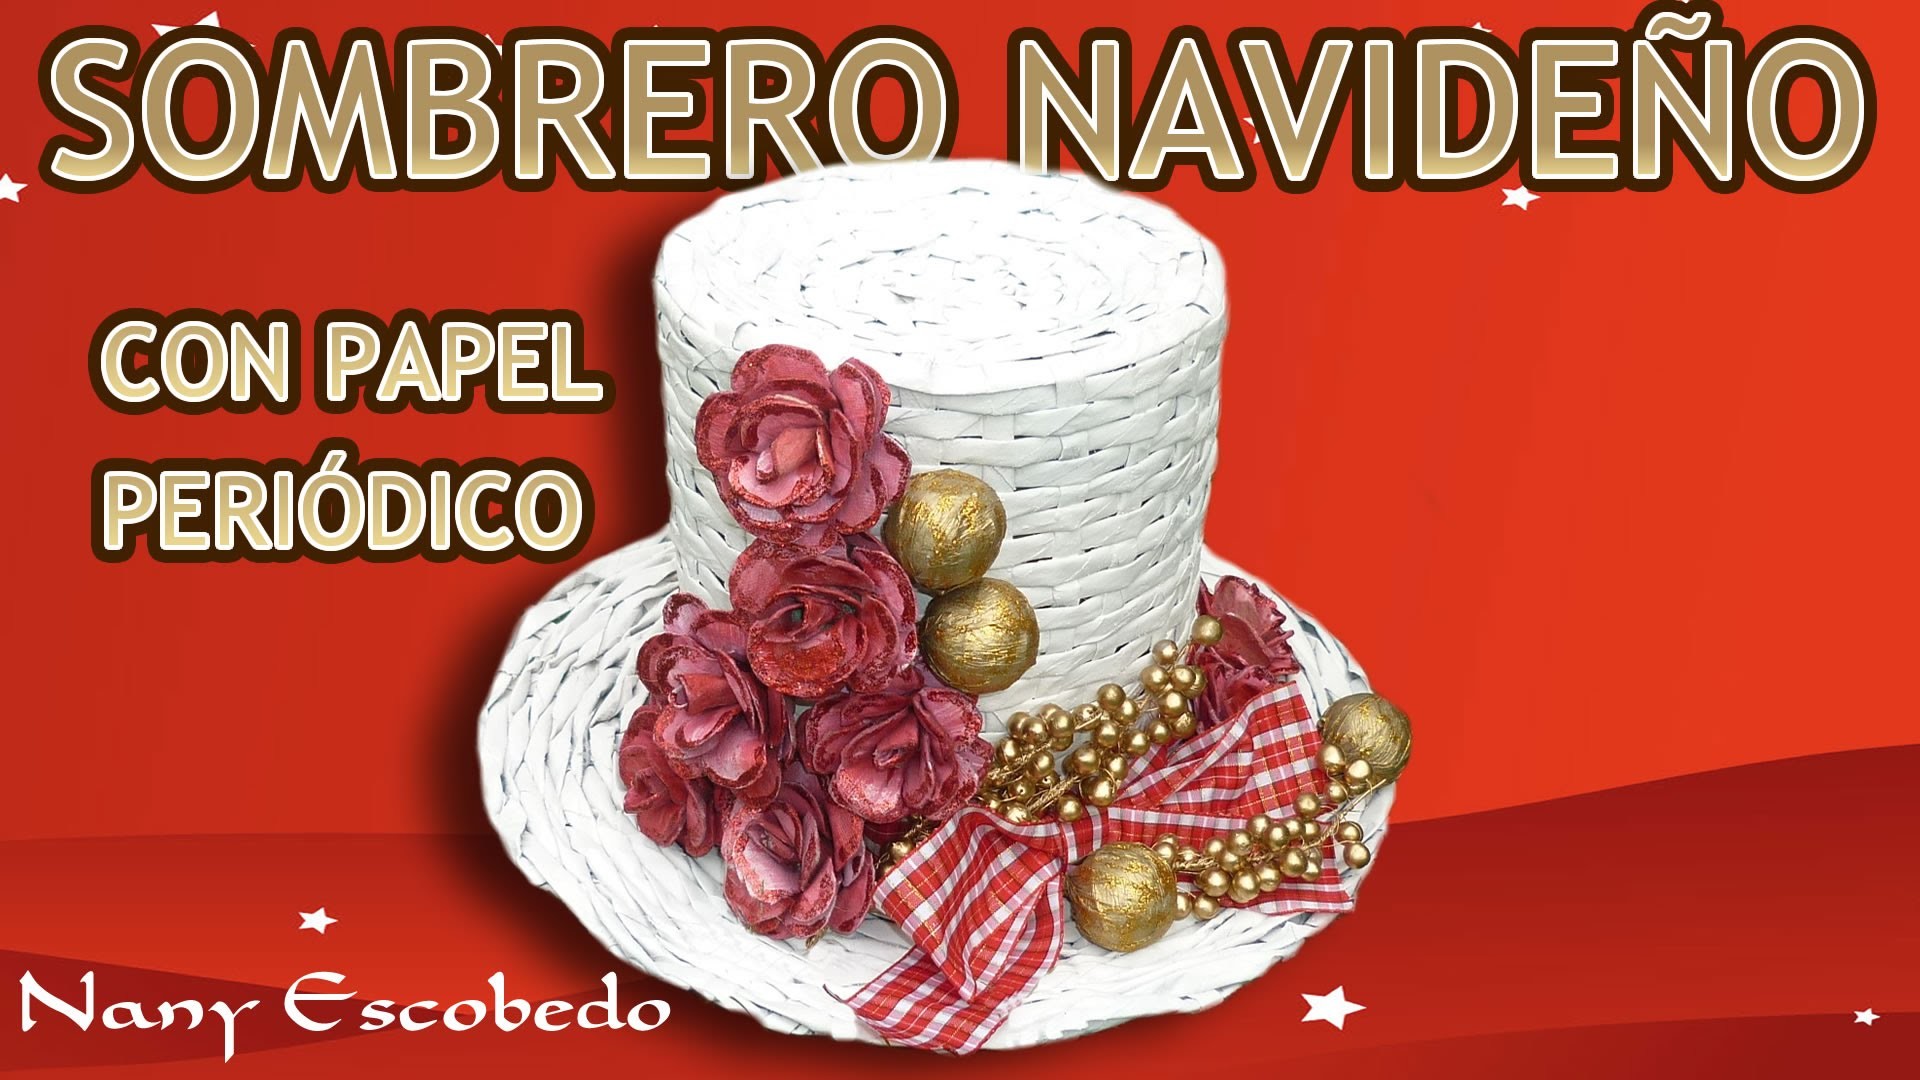 SOMBRERO NAVIDEÑO CON PAPEL PERIÓDICO. Christmas hat with newspaper